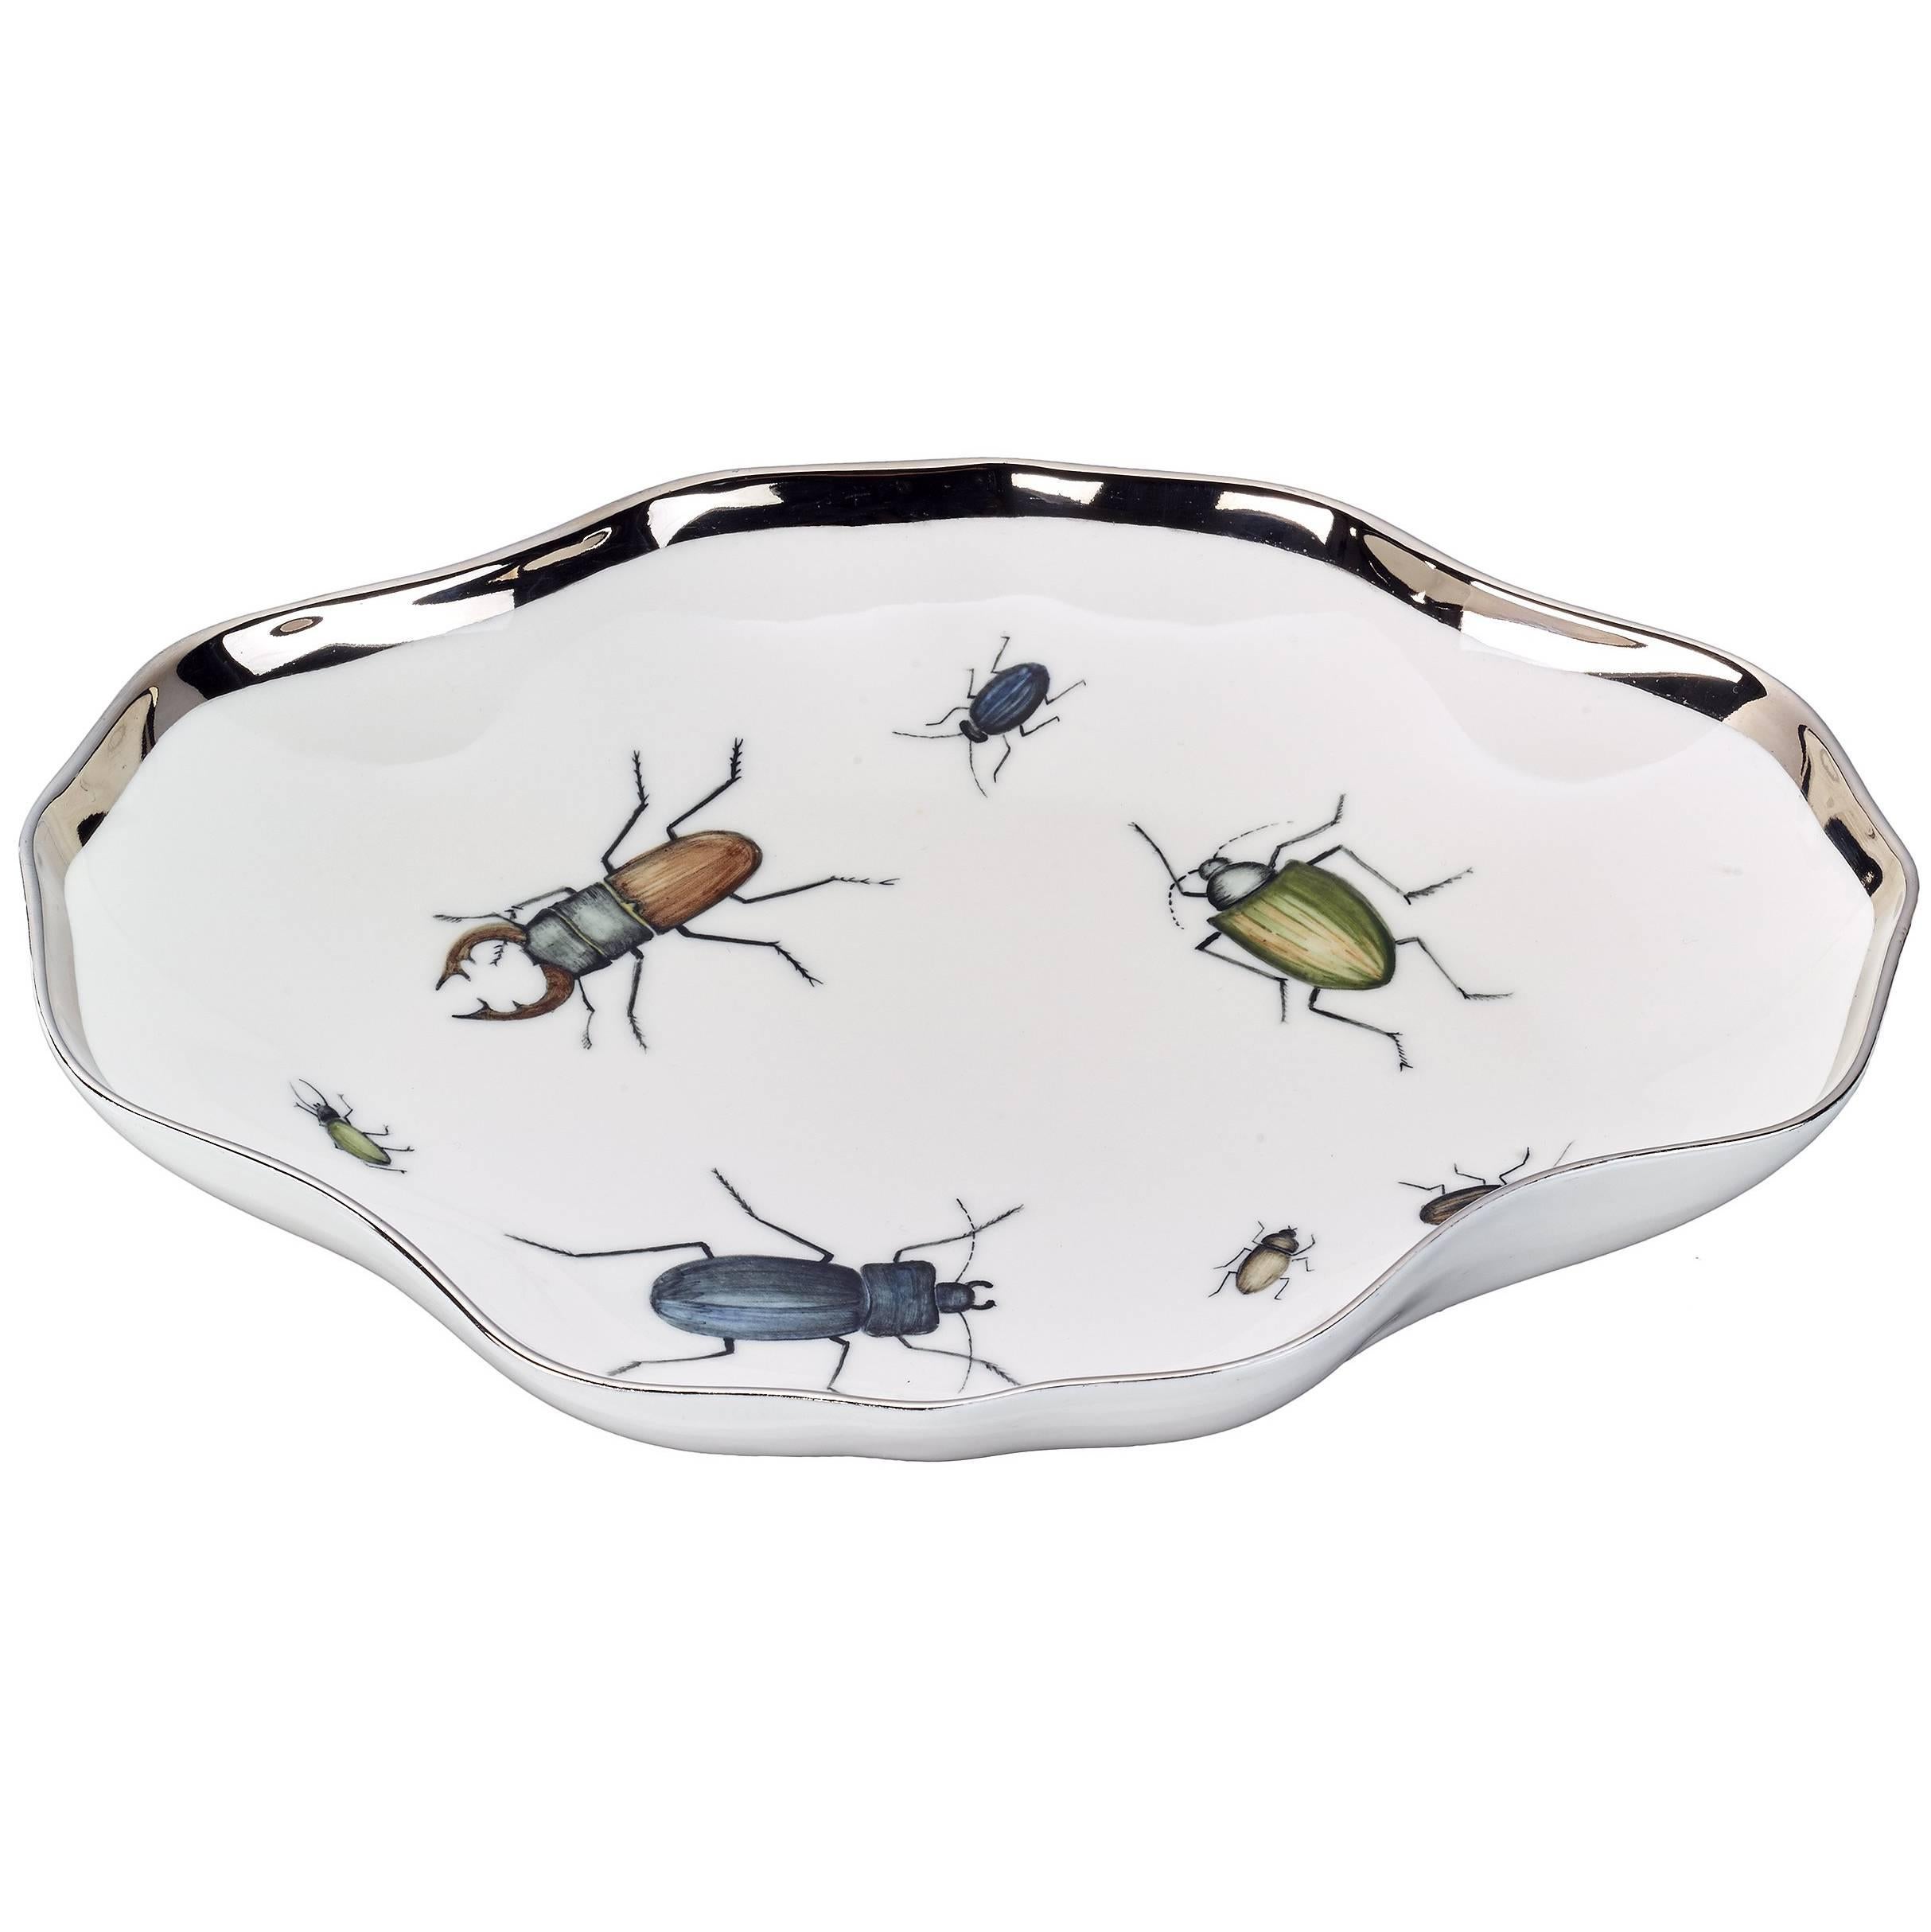 Modern Porcelain Dish with Beetles Sofina Boutique Kitzbuehel